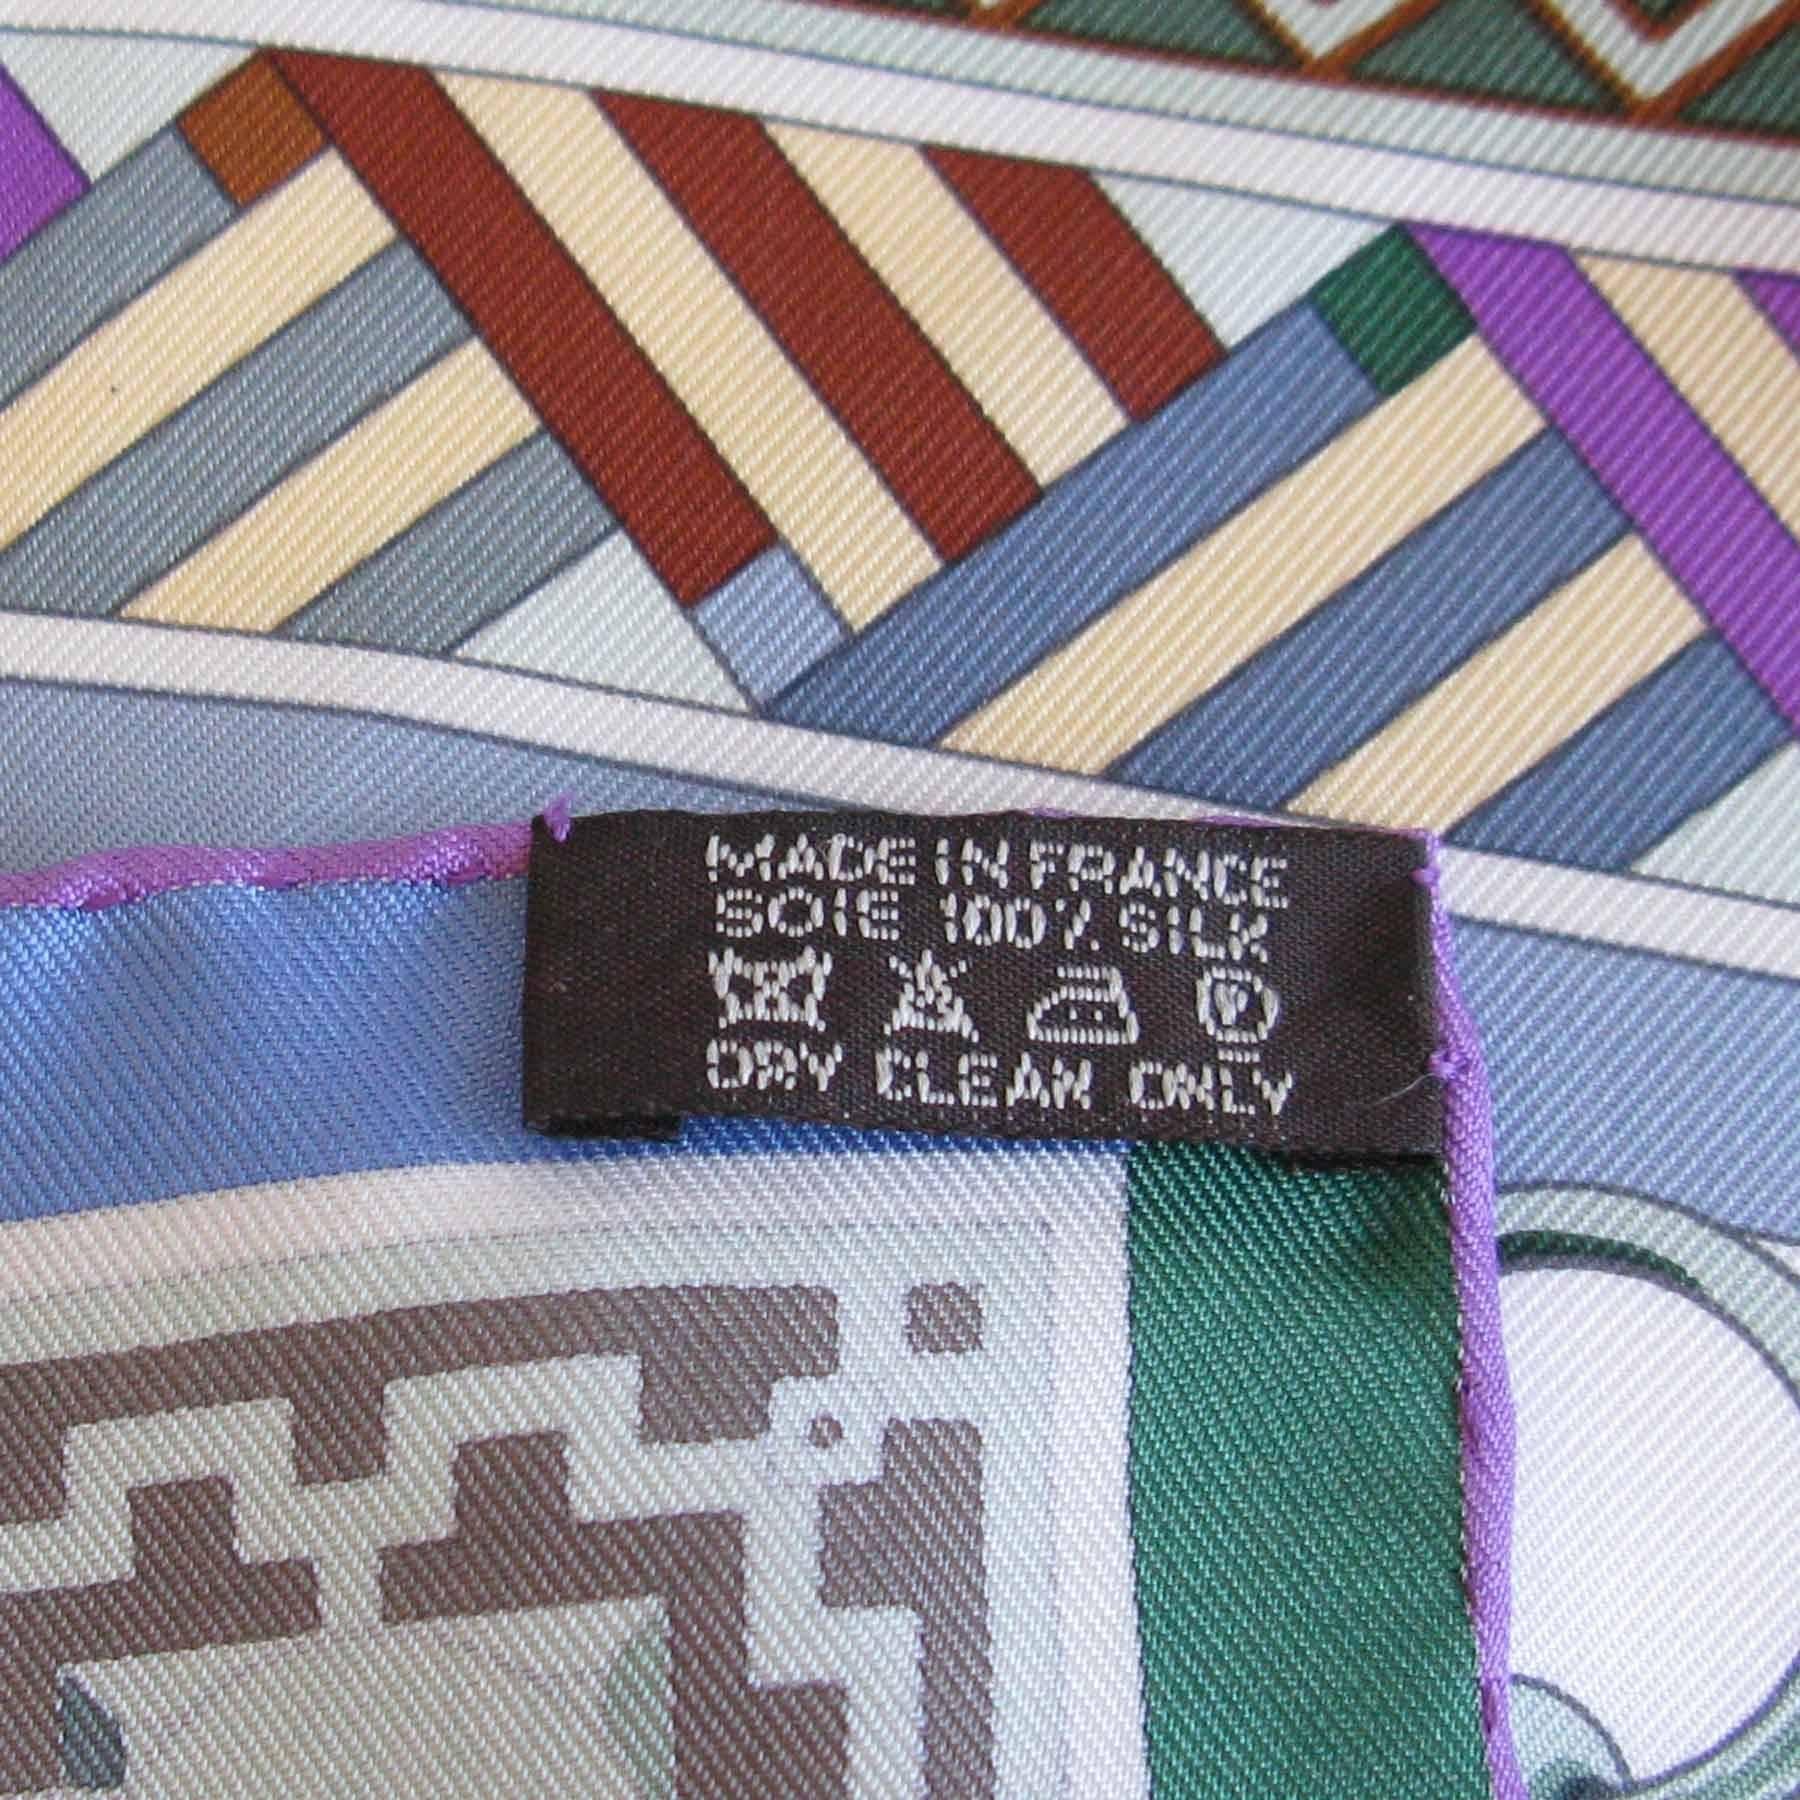 Women's HERMES 'Collier de Chien' Scarf in Multicolored Silk